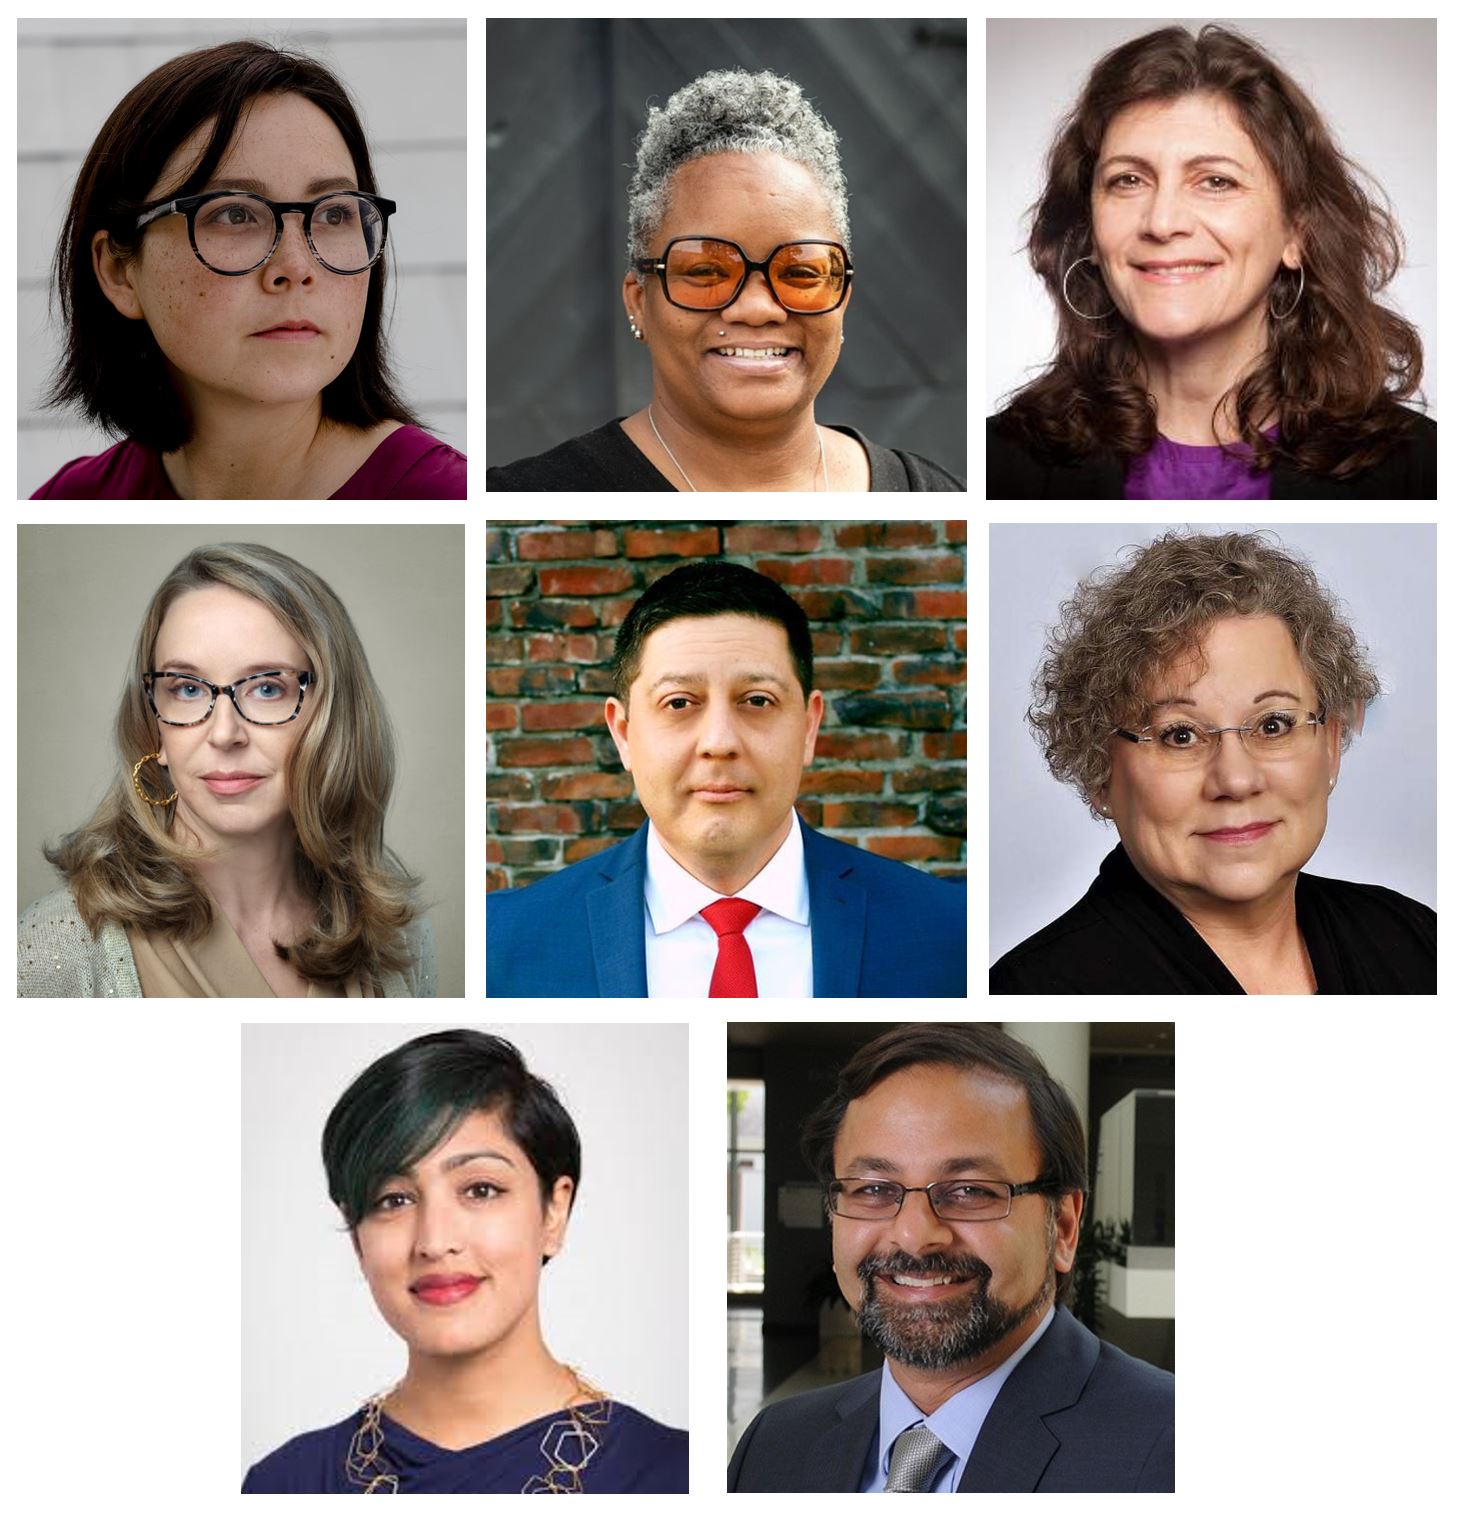 Speakers (left-right, top-bottom): Kristian Lum, Tawana Petty, Irina Raicu; Heather Patterson, Brian Hofer, Linda Gerull; Rumman Chowdhury, Deven Desai